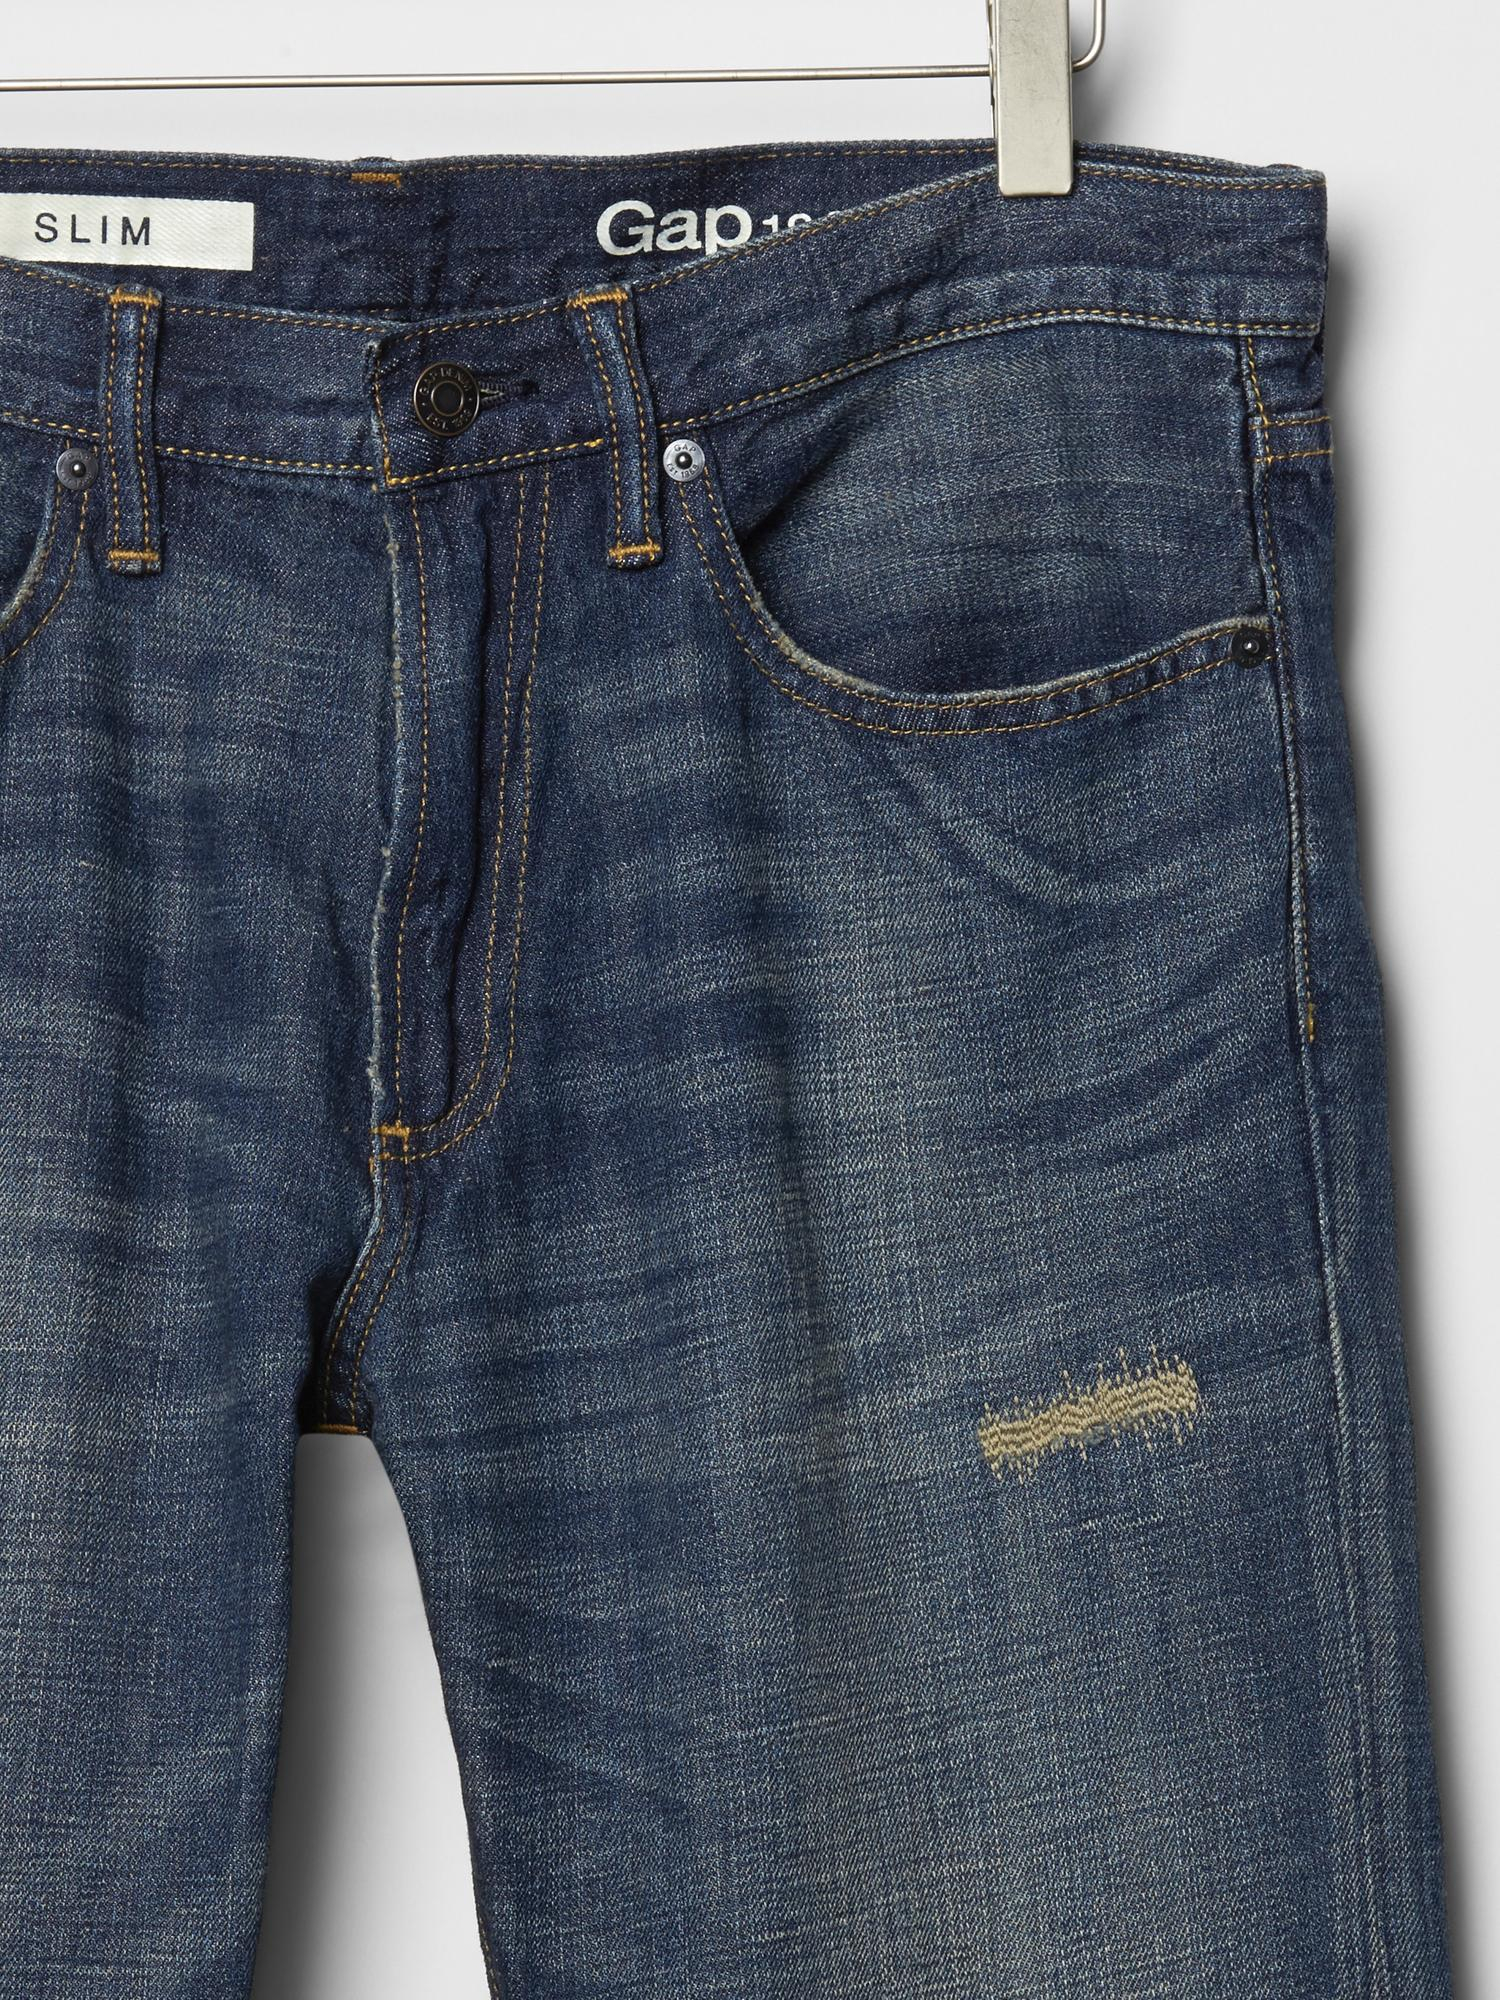 Gap 1969 Slim Fit Jeans Flagstaff Wash In Blue For Men Indigo Repair Lyst 